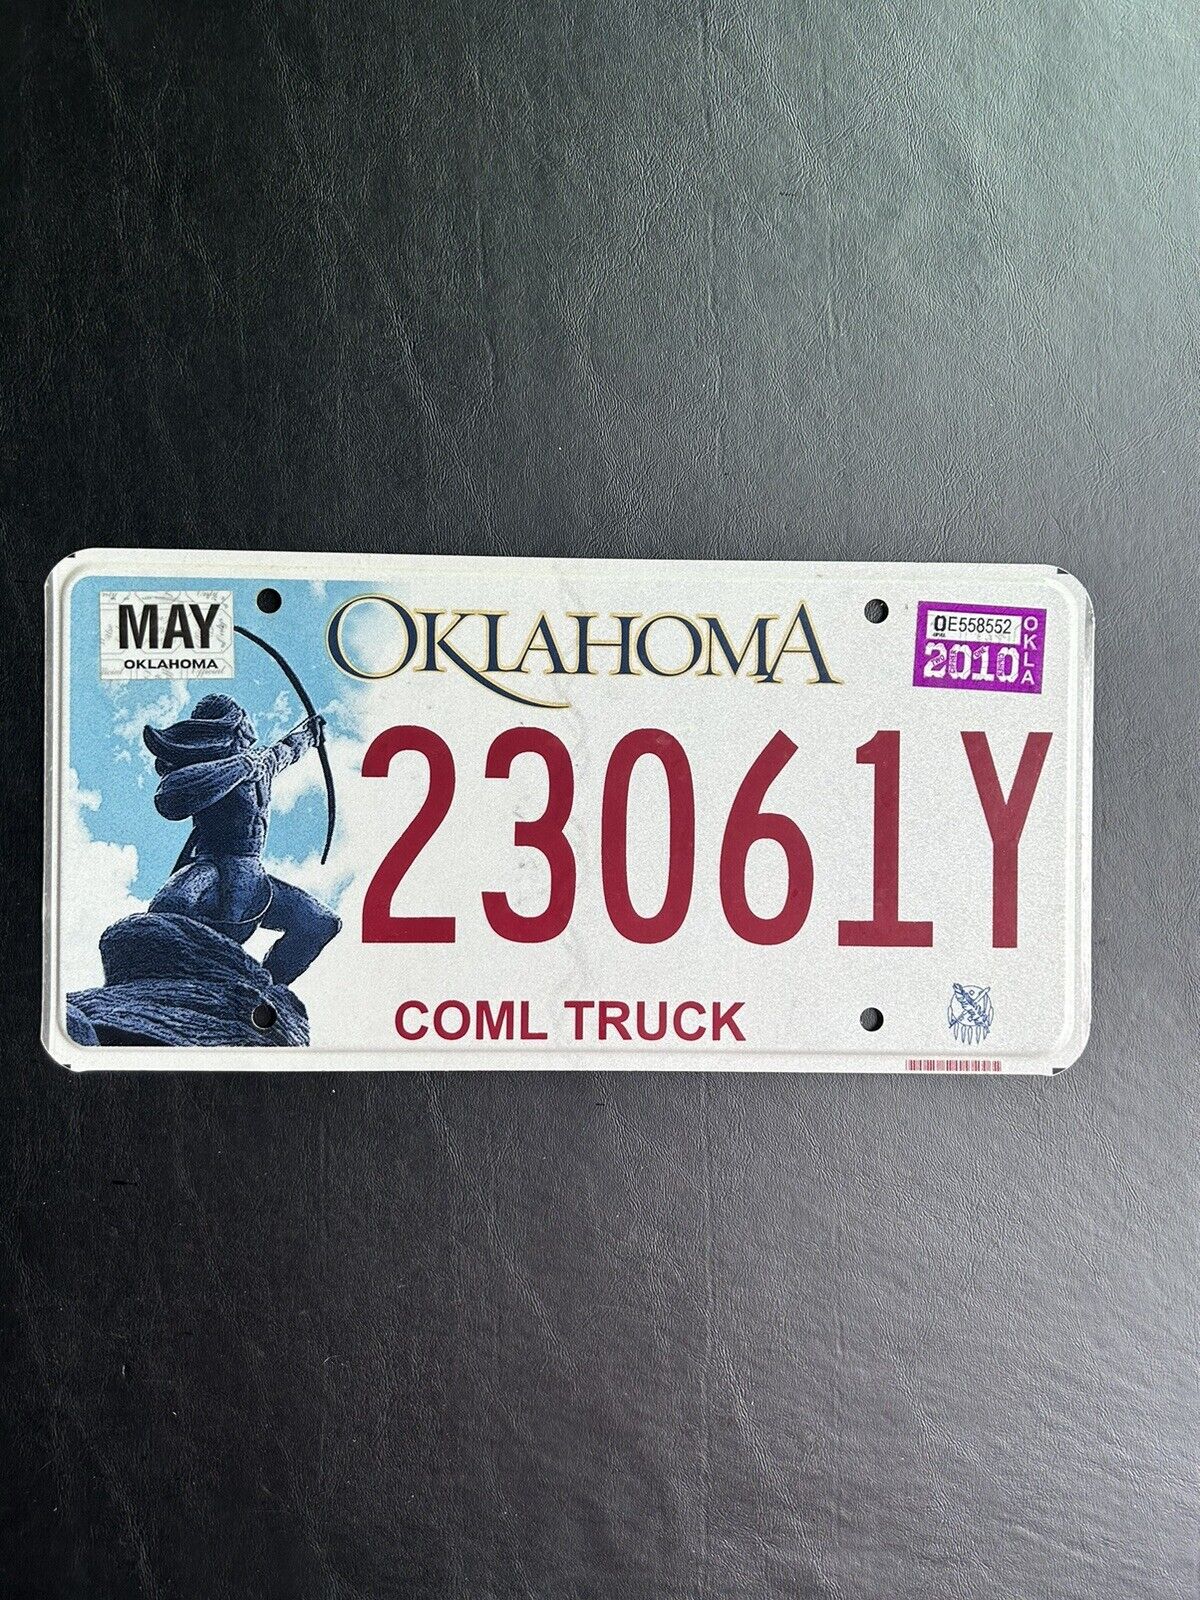 2010 Oklahoma License Plate COML TRUCK 23061Y